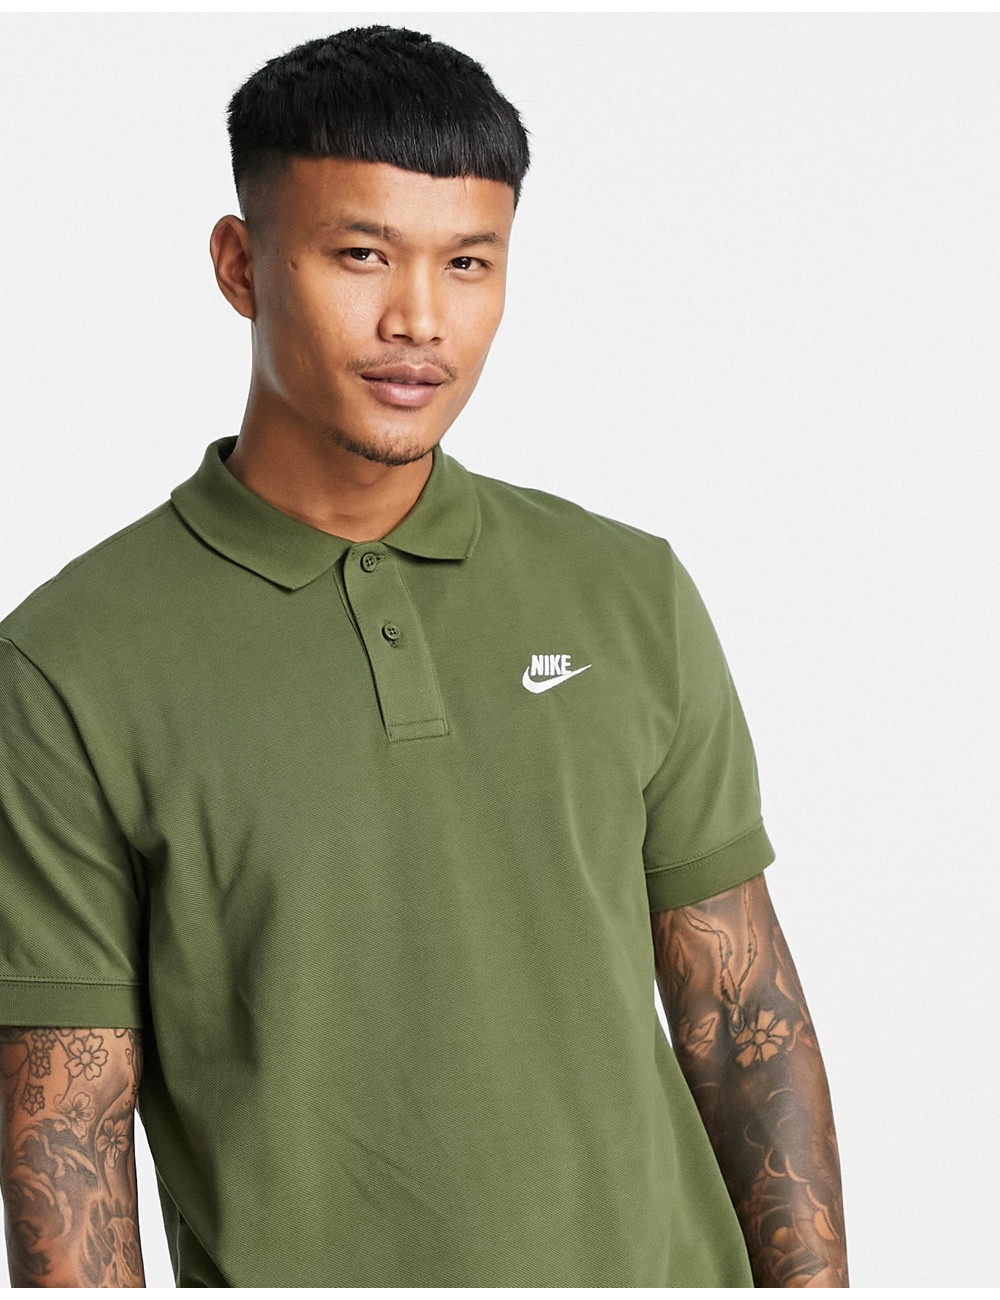 Nike Club polo in khaki